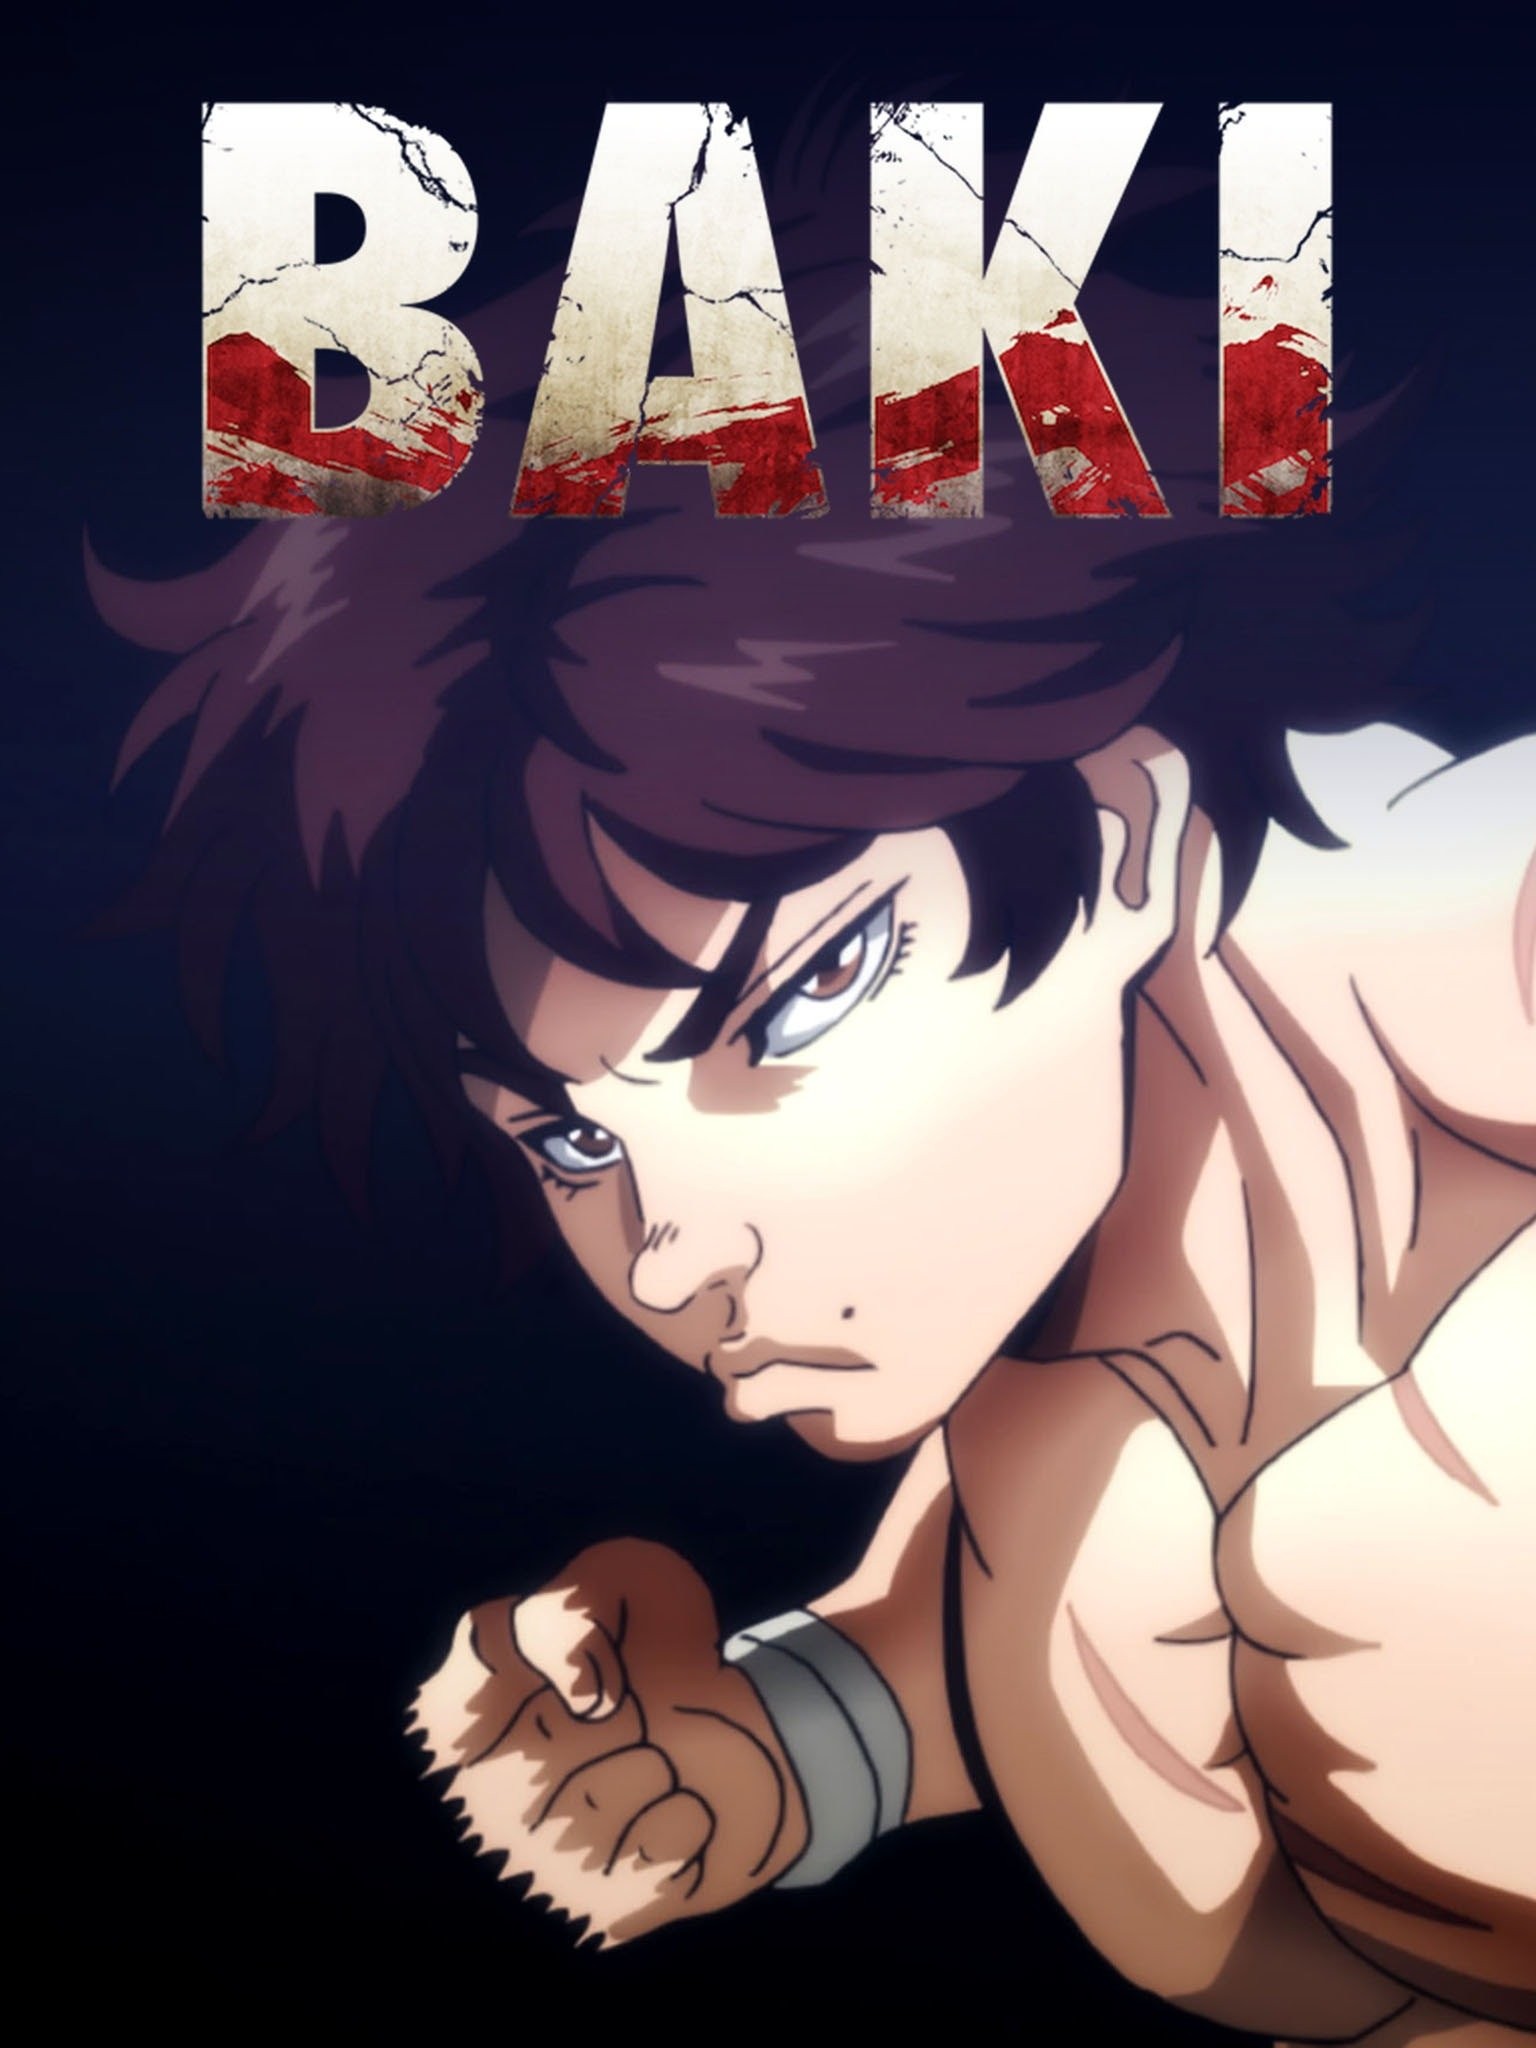 ULTIMATE] Baki The Grappler Anime Complete Collection(Season 1,2,3,4,5 &  OVA)